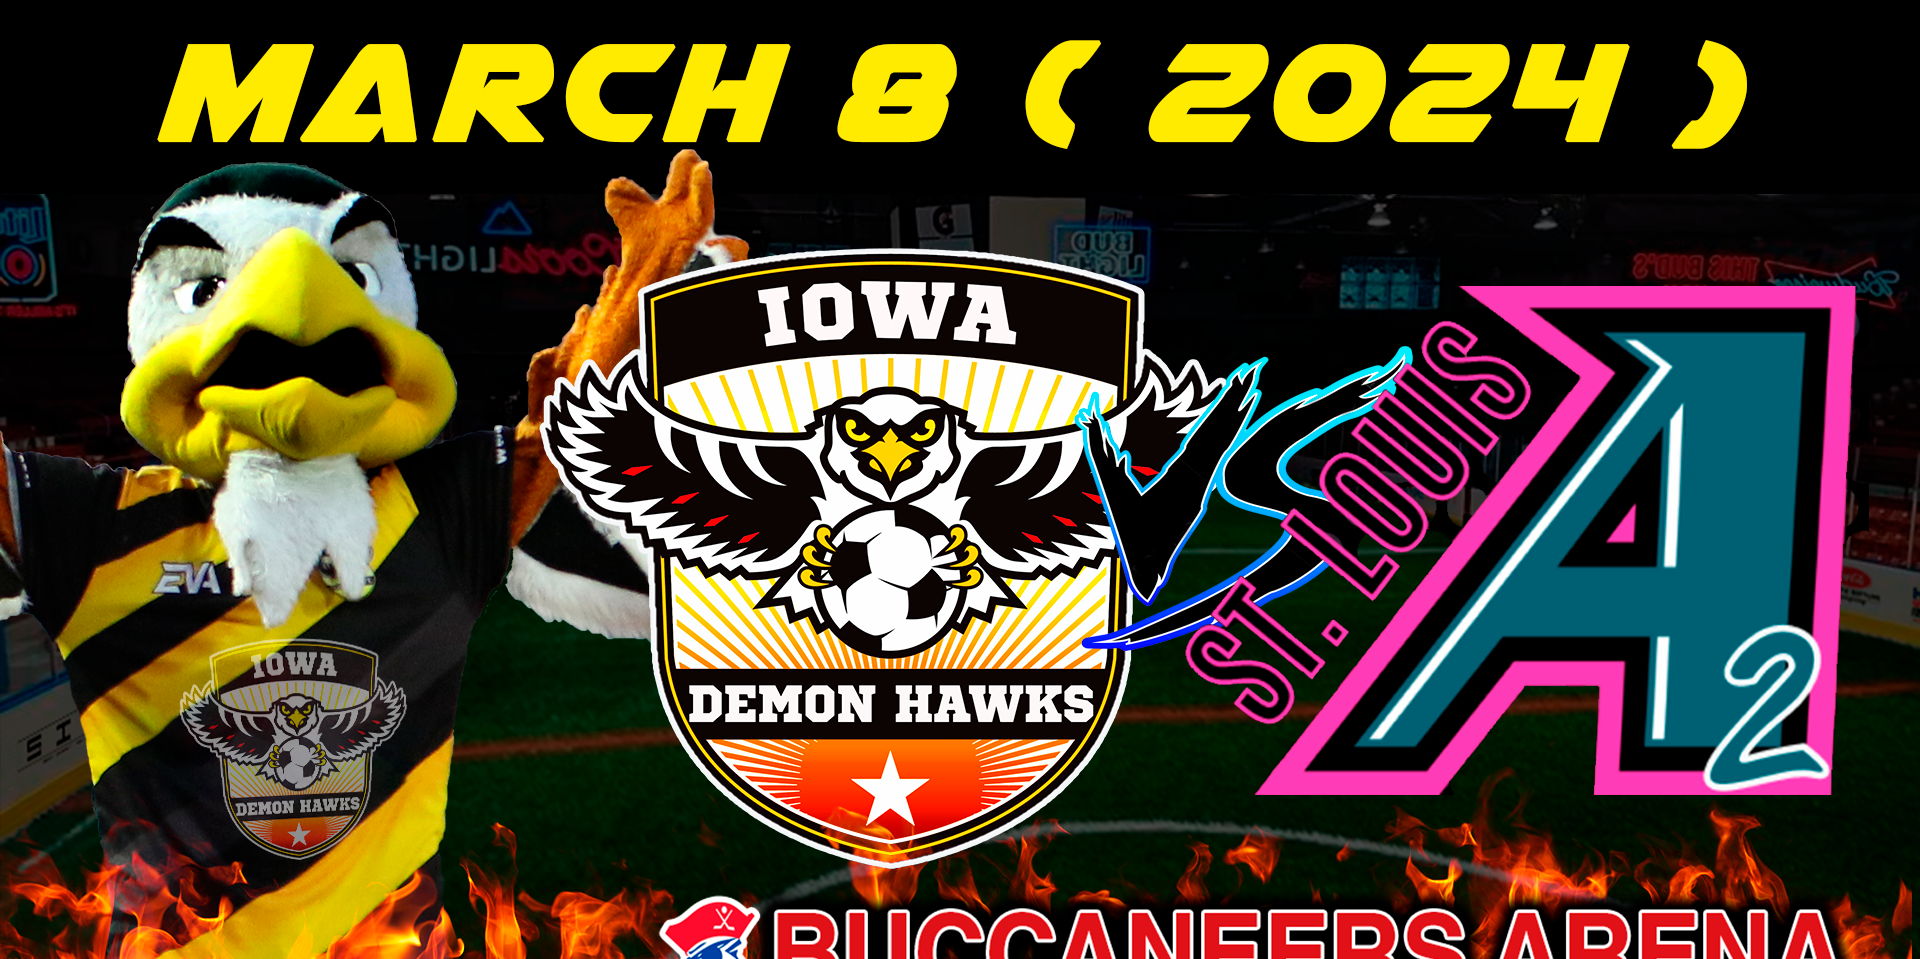 St.Louis Ambush 2 vs Iowa Demon Hawks promotional image